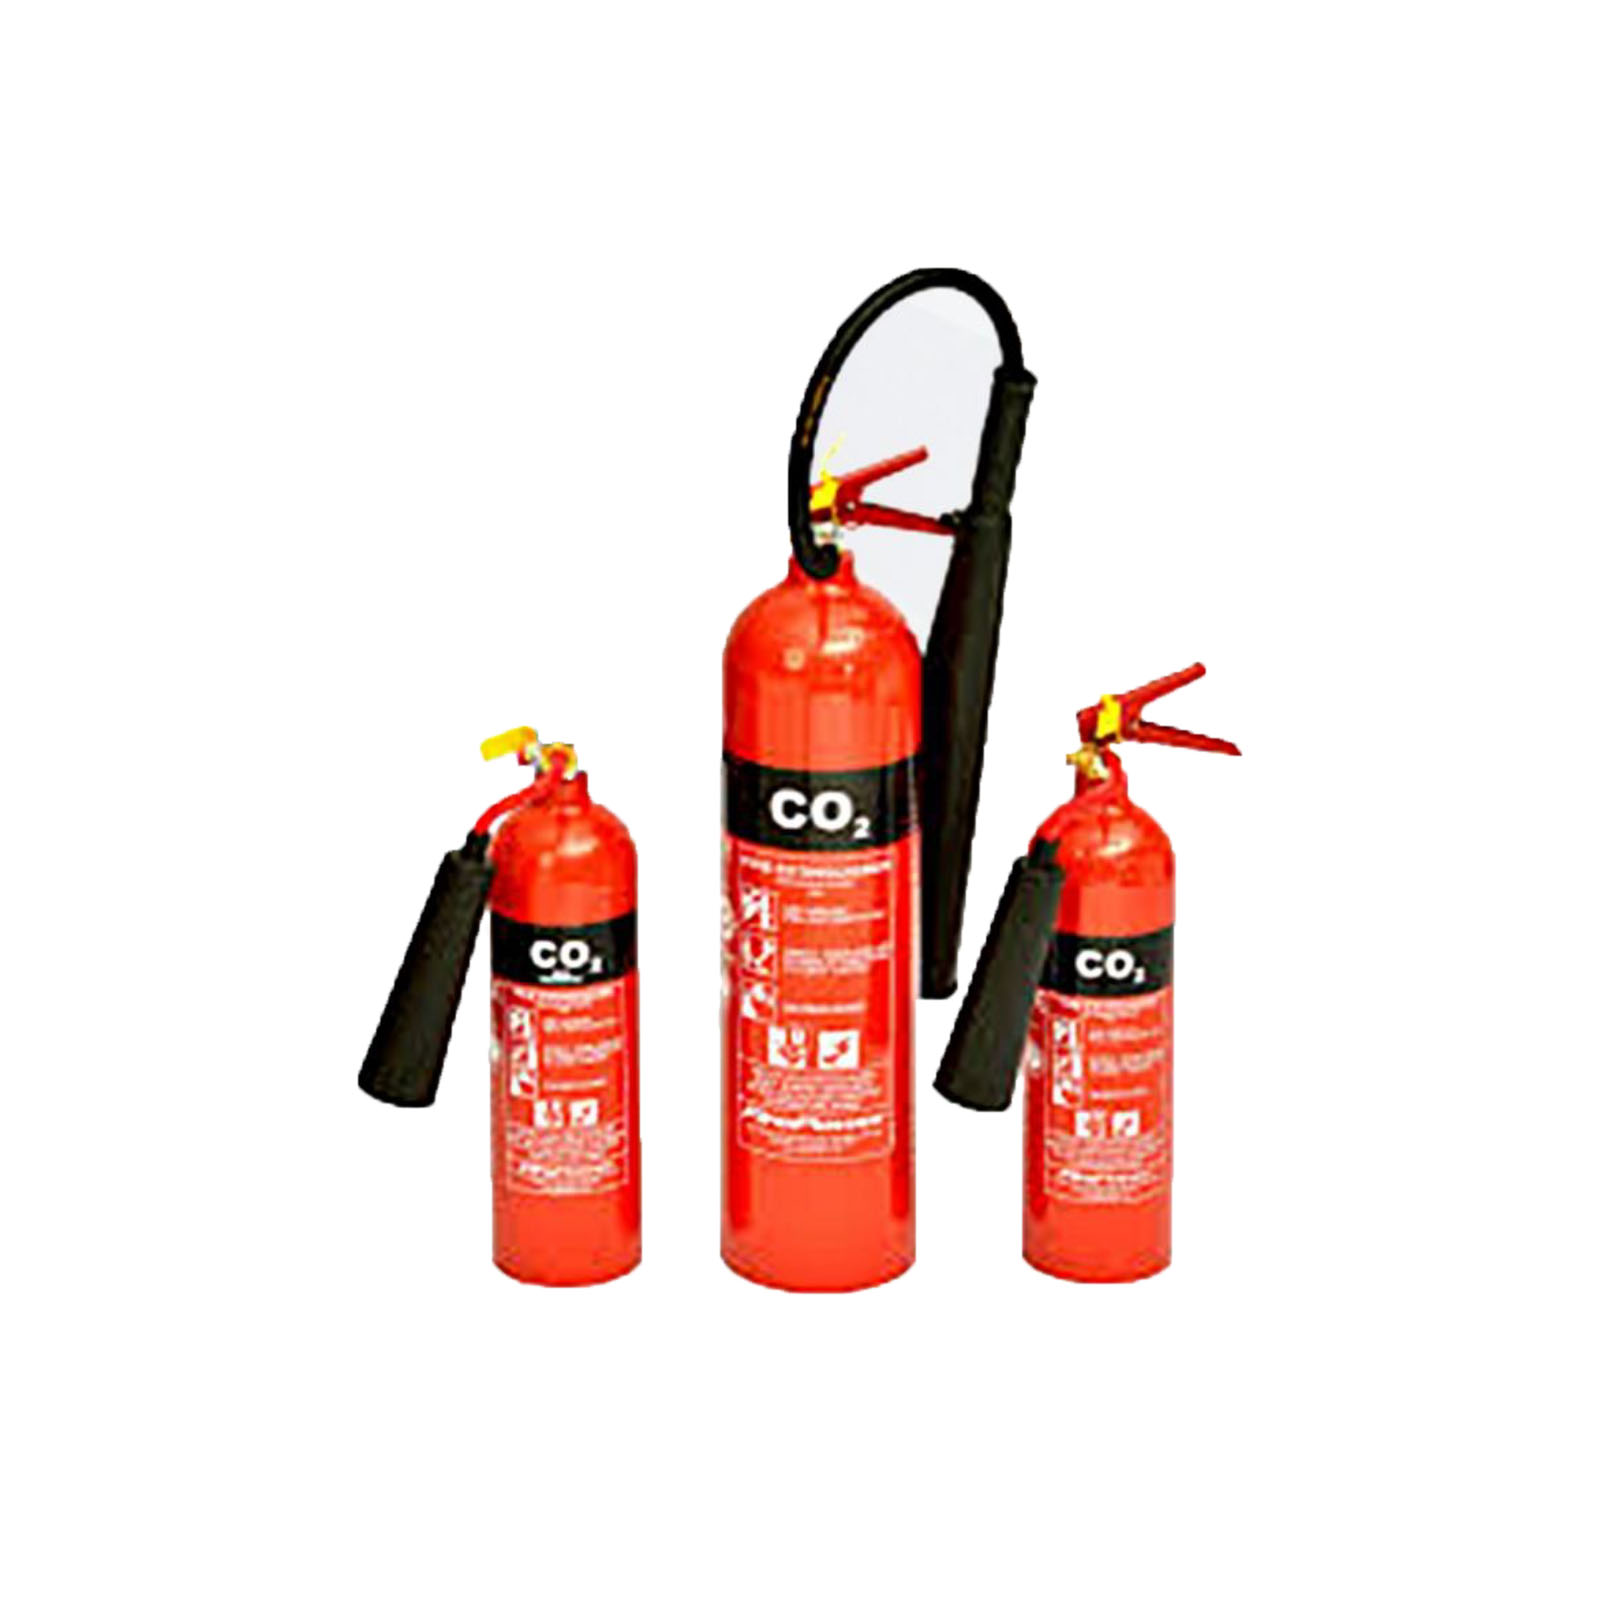 Carbon Dioxide (Co2) Fire Extinguisher